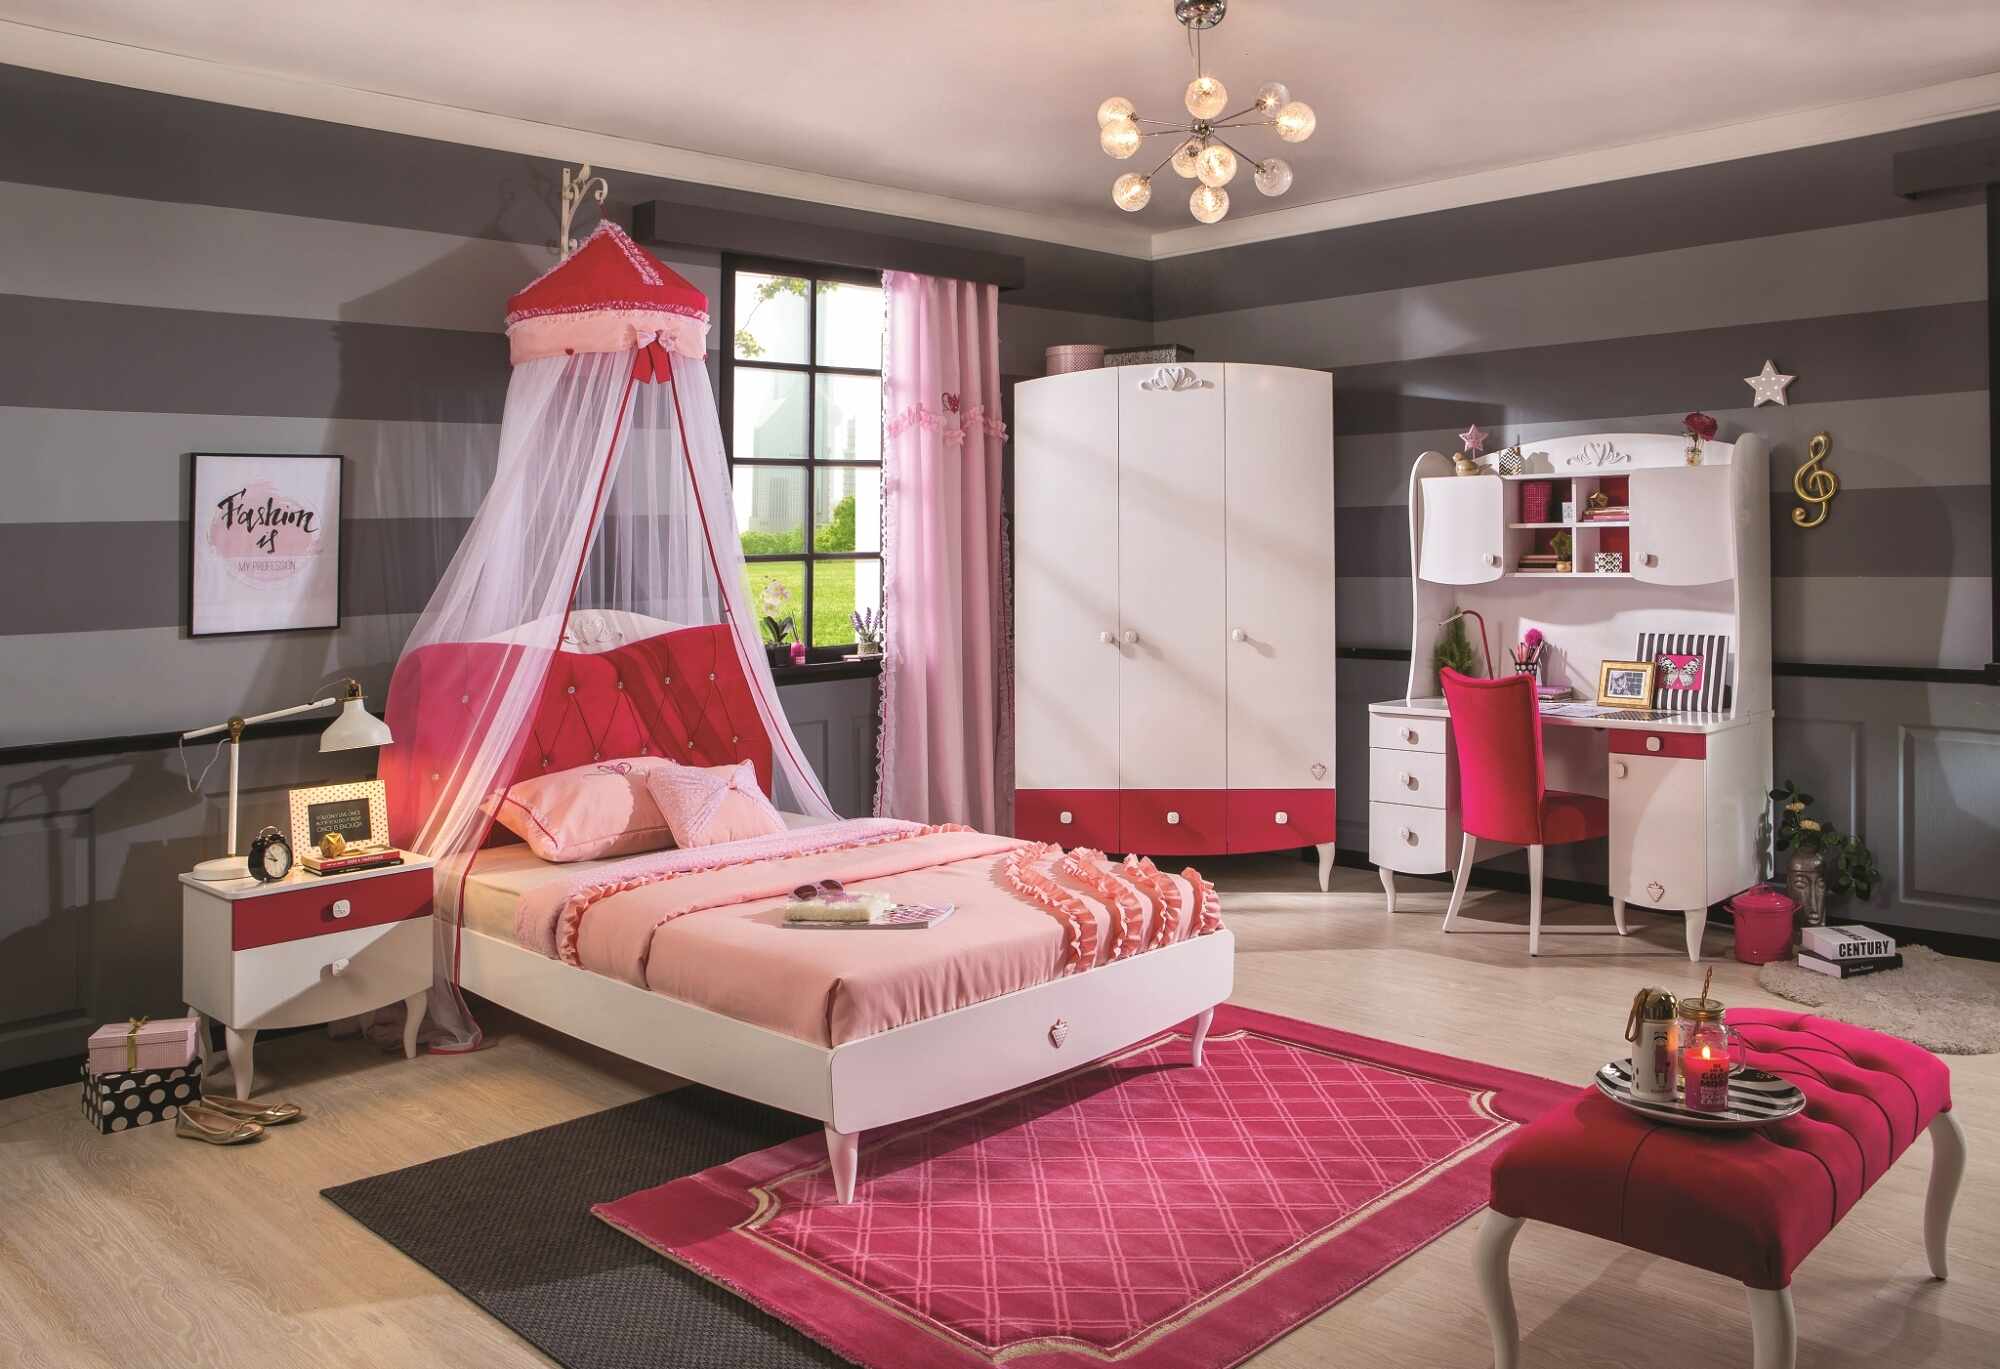 Set Mobila dormitor din pal, pentru fete si tineret, 5 piese, Yakut Alb / Roz, 200 x 120 cm